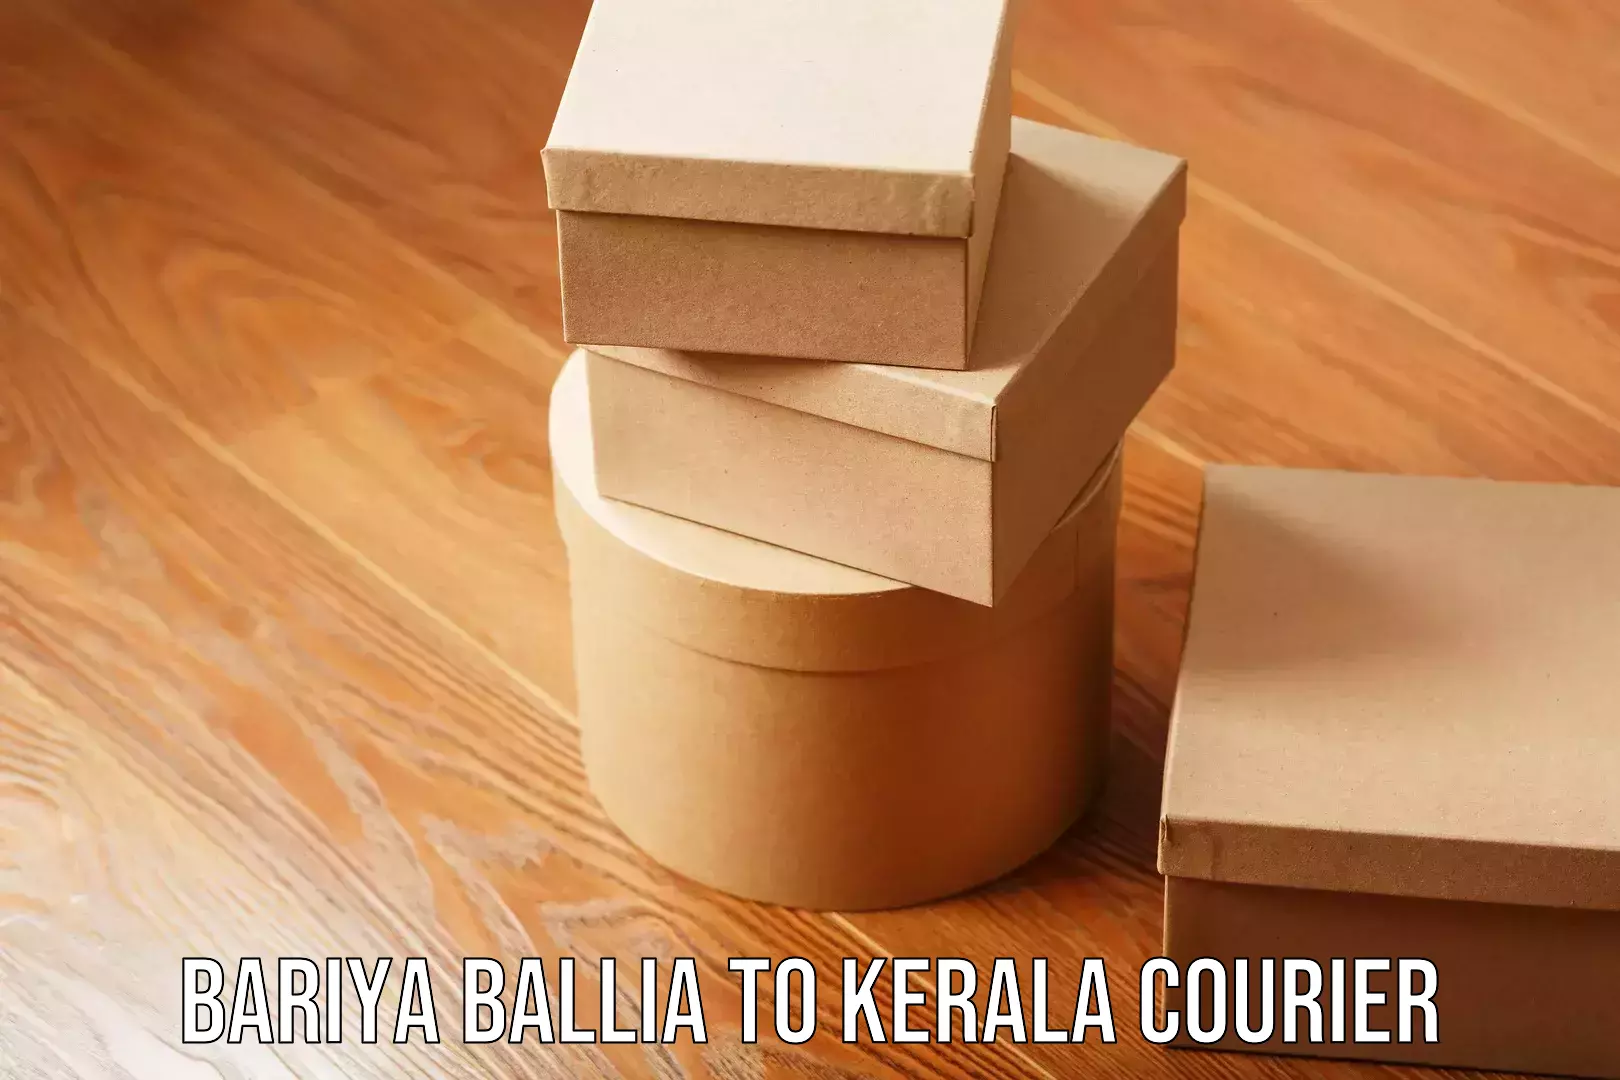 Door-to-door freight service Bariya Ballia to Kerala